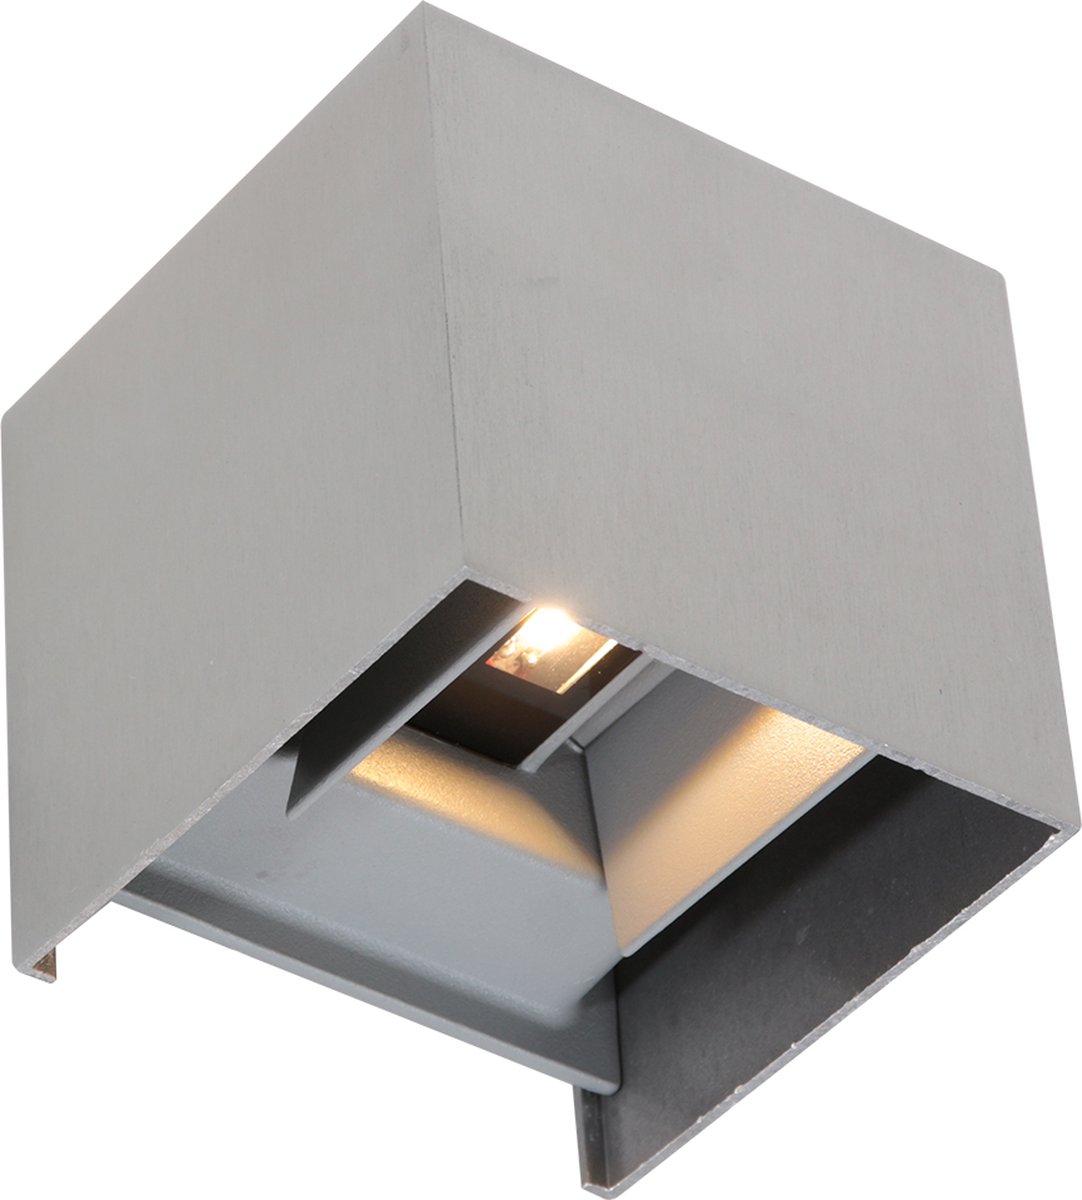 Wandlamp - Bussandri Limited - Modern - Metaal - Modern - LED - L: 11cm - Voor Binnen - Woonkamer - Eetkamer - Zilver